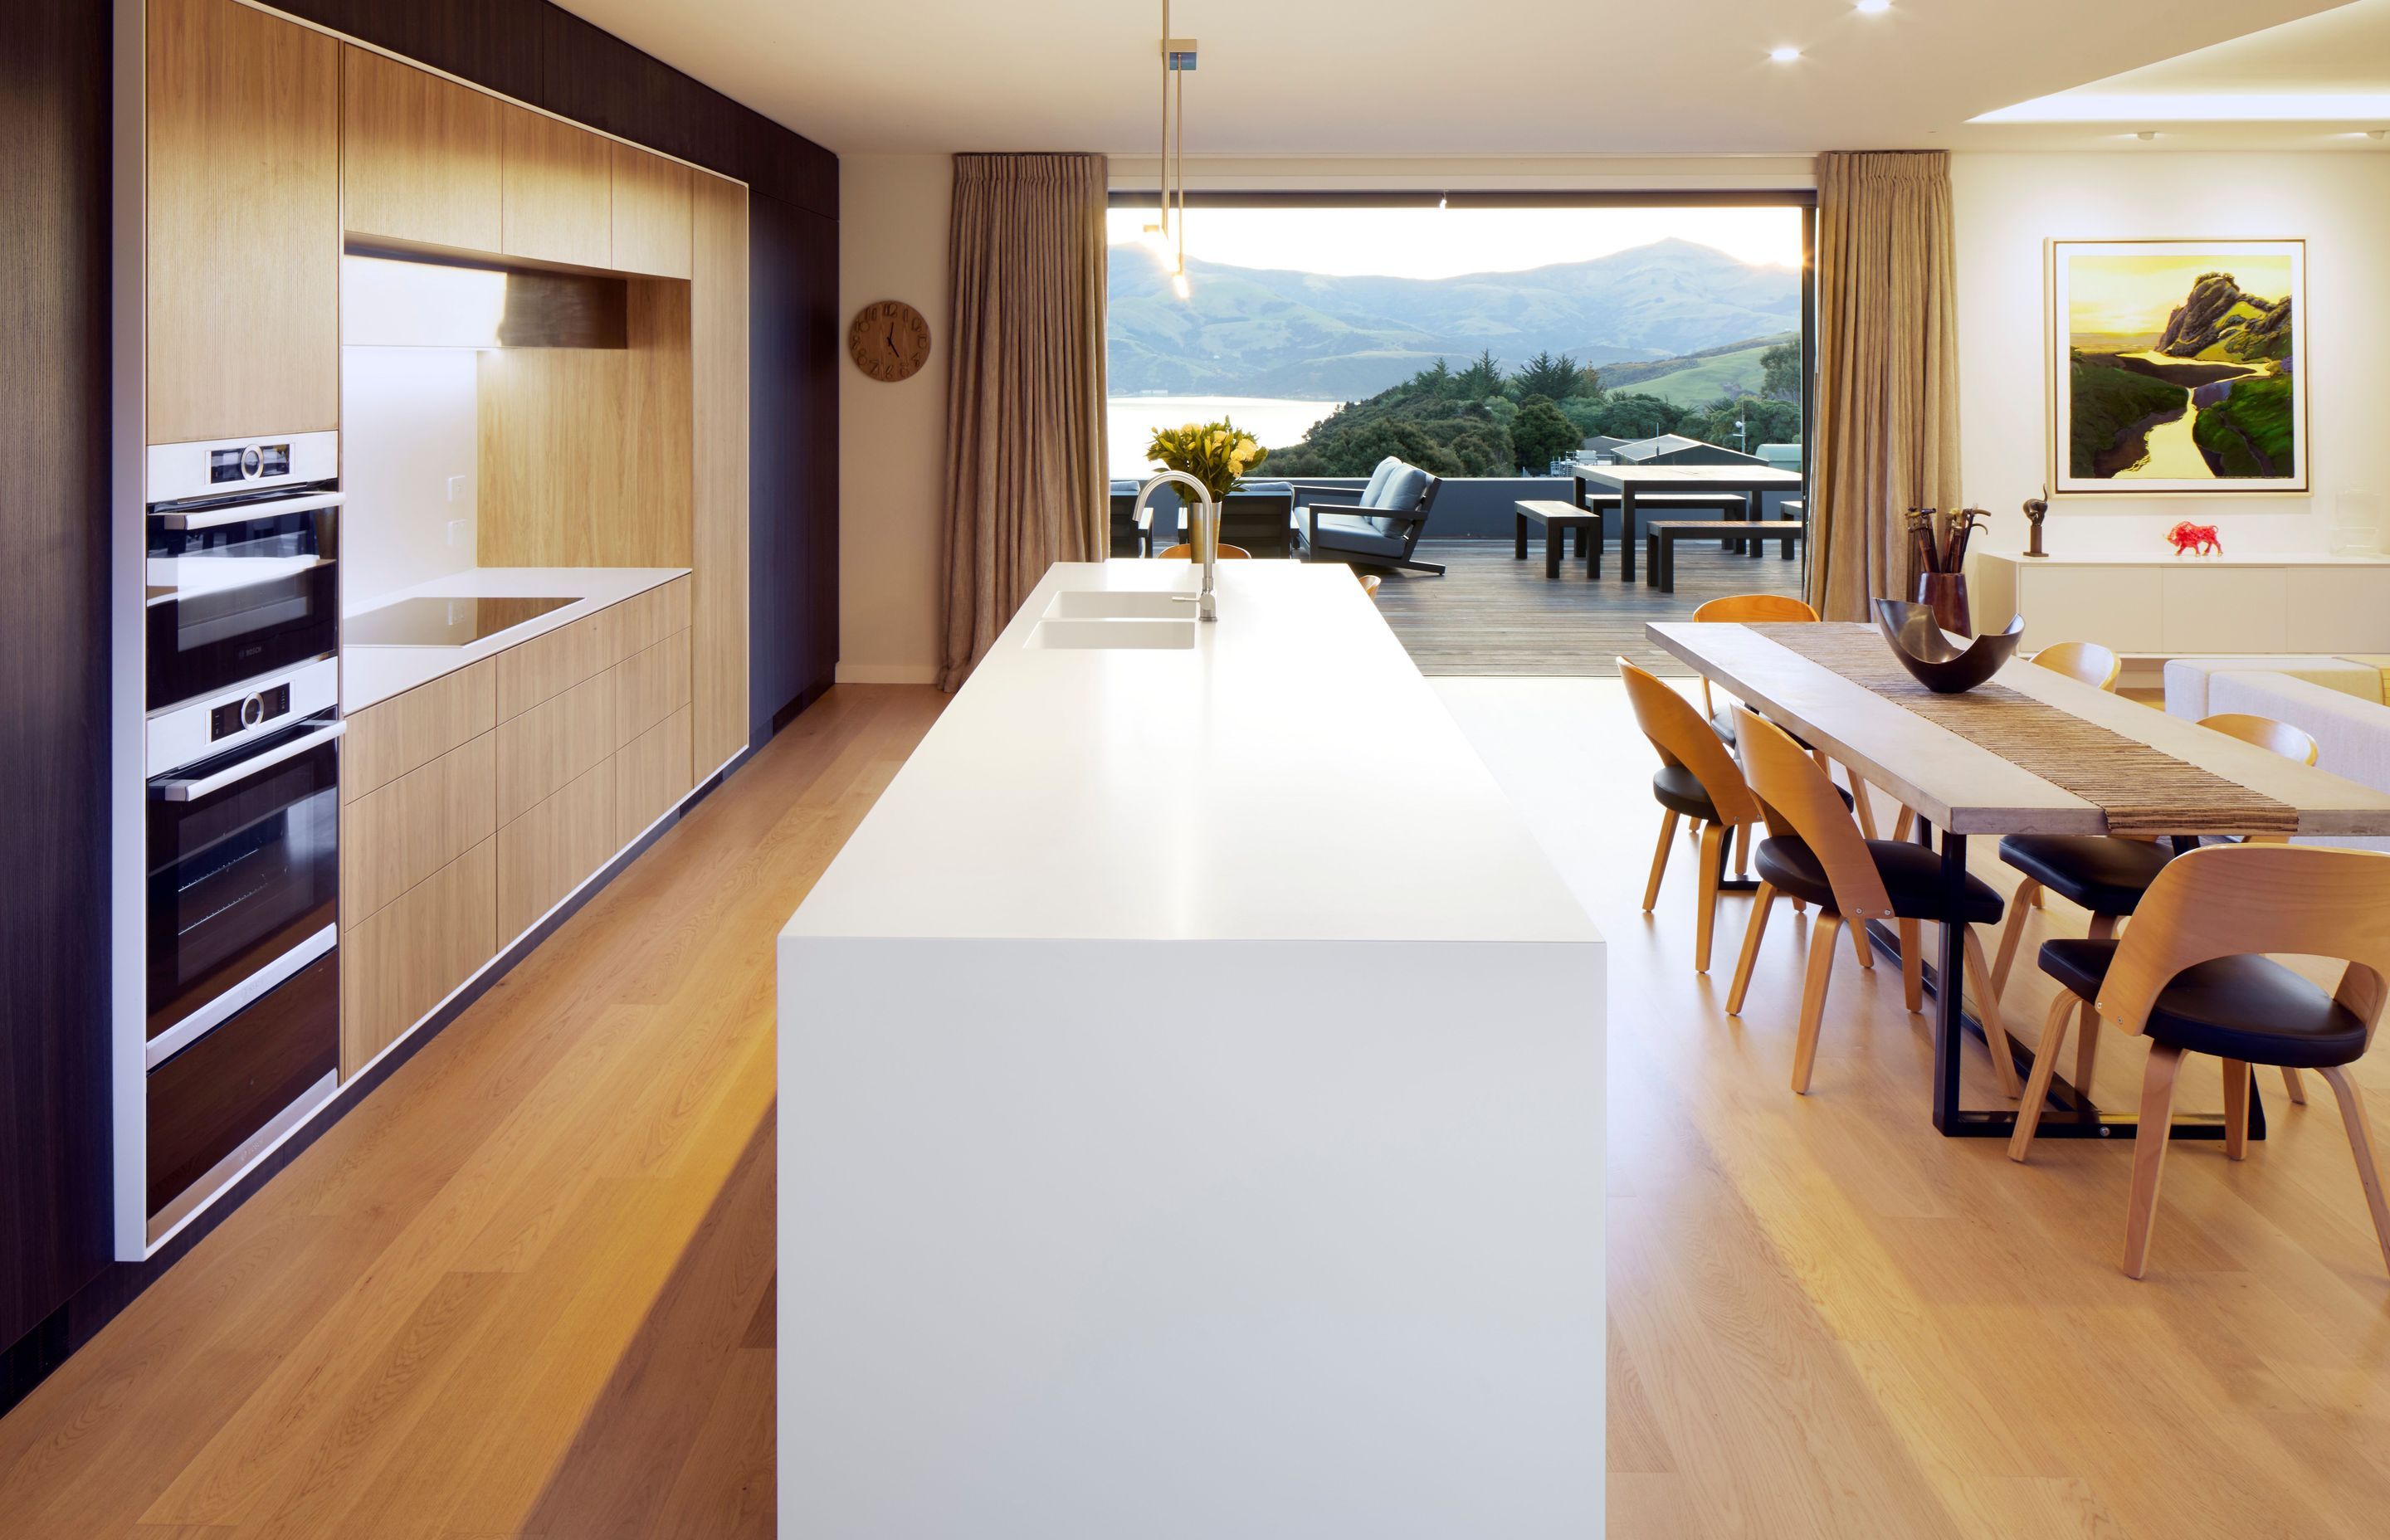 Multi Award winning kitchen by Ingrid Geldof Design